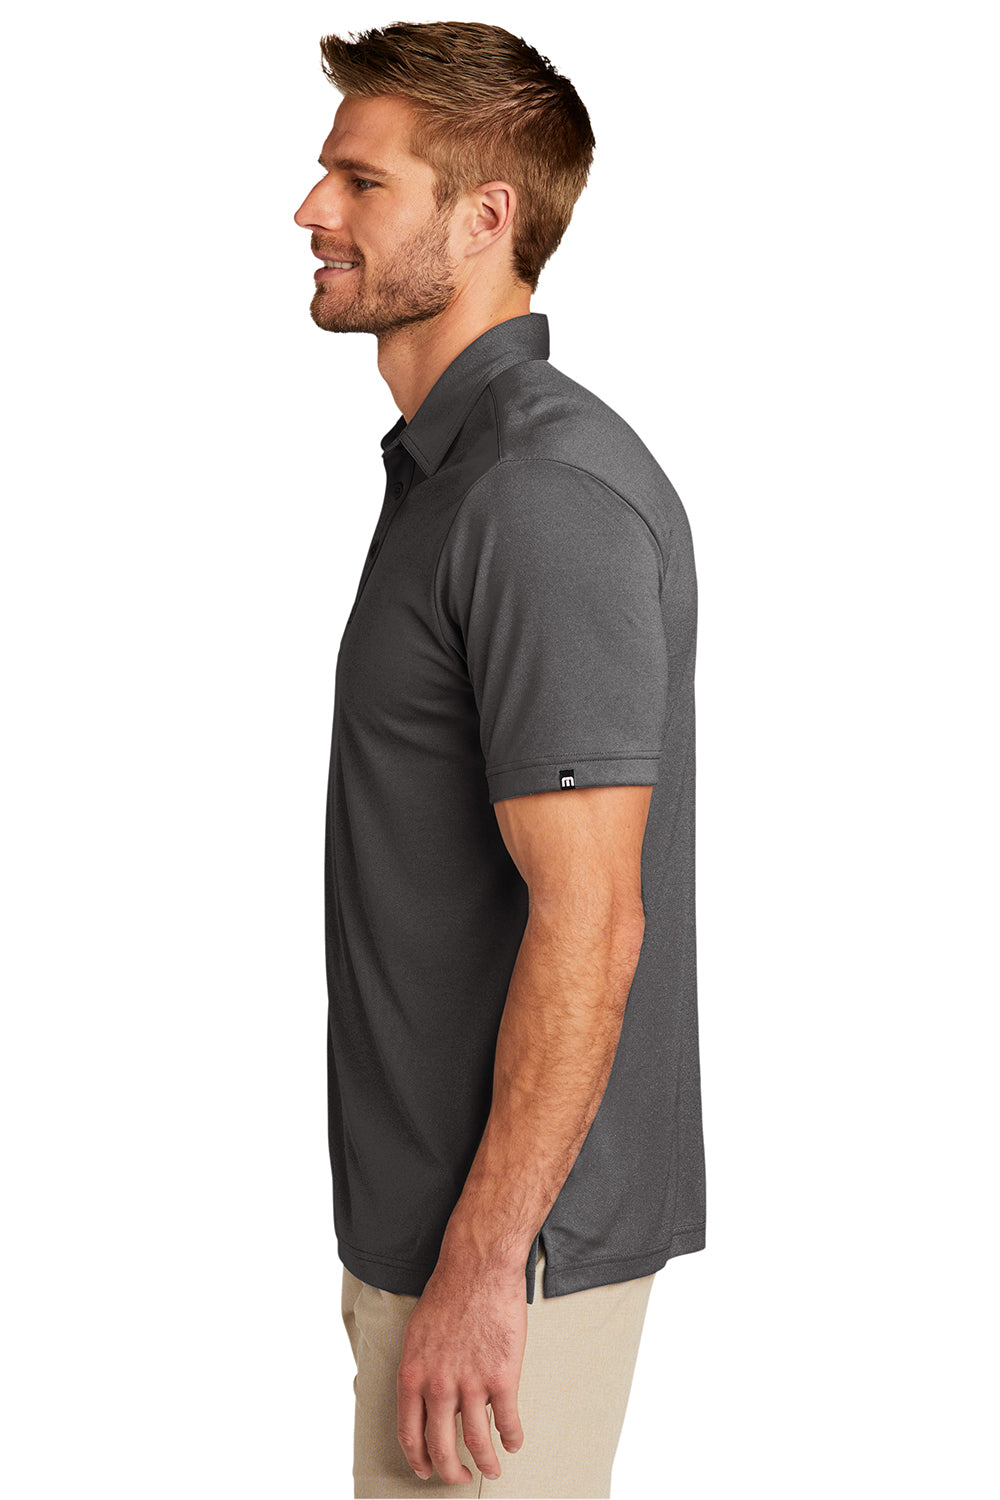 TravisMathew TM1MU410 Mens Coto Performance Moisture Wicking Short Sleeve Polo Shirt Quiet Shade Grey/Black Model Side